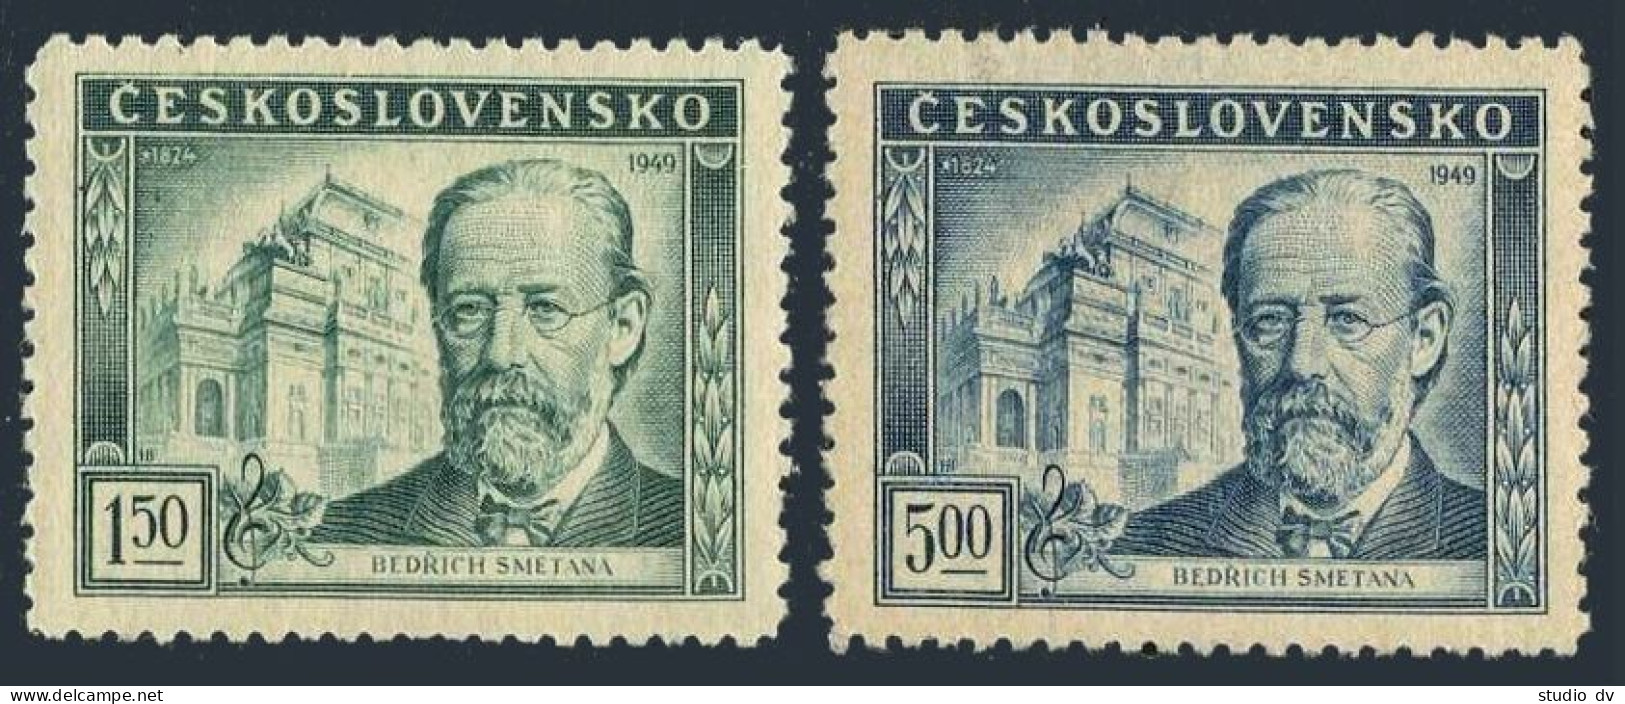 Czechoslovakia 386-387, MNH. Michel 578-579. Bedrich Smetana, Composer, 1949. - Neufs